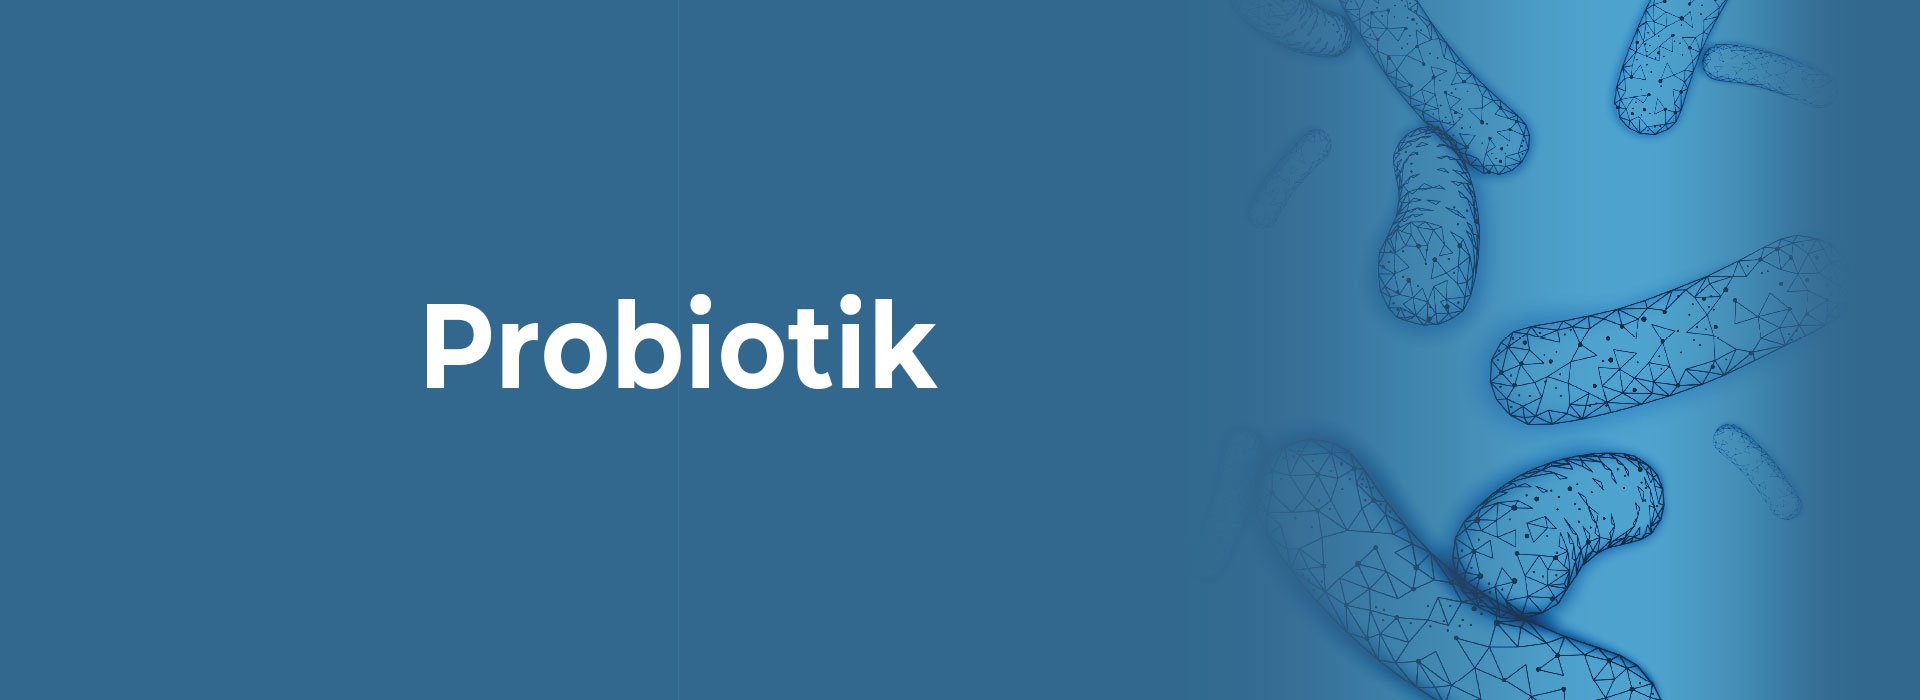 New Image International:Probiotik